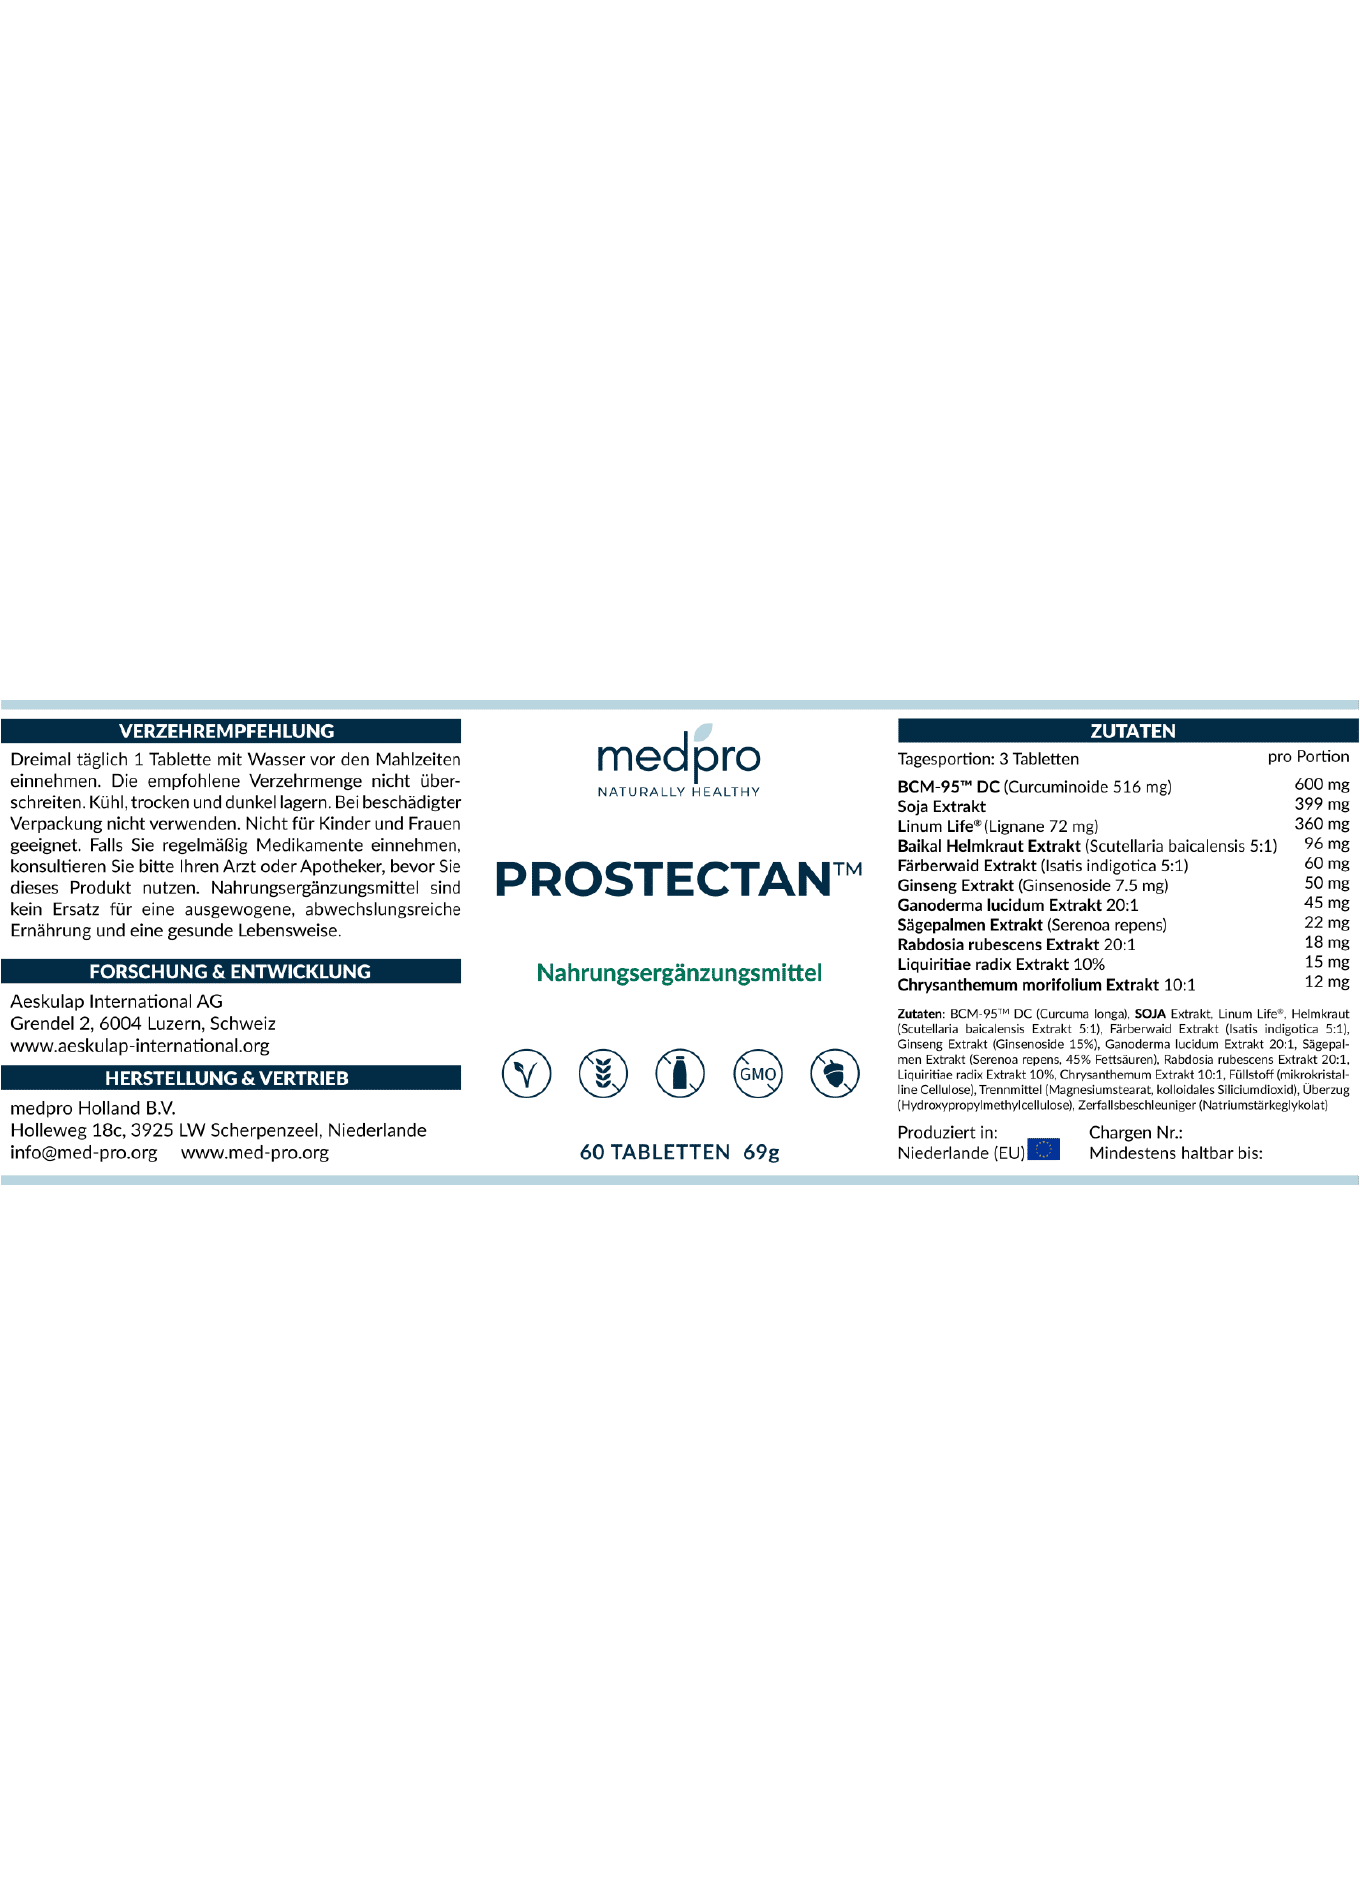 Prostectan label